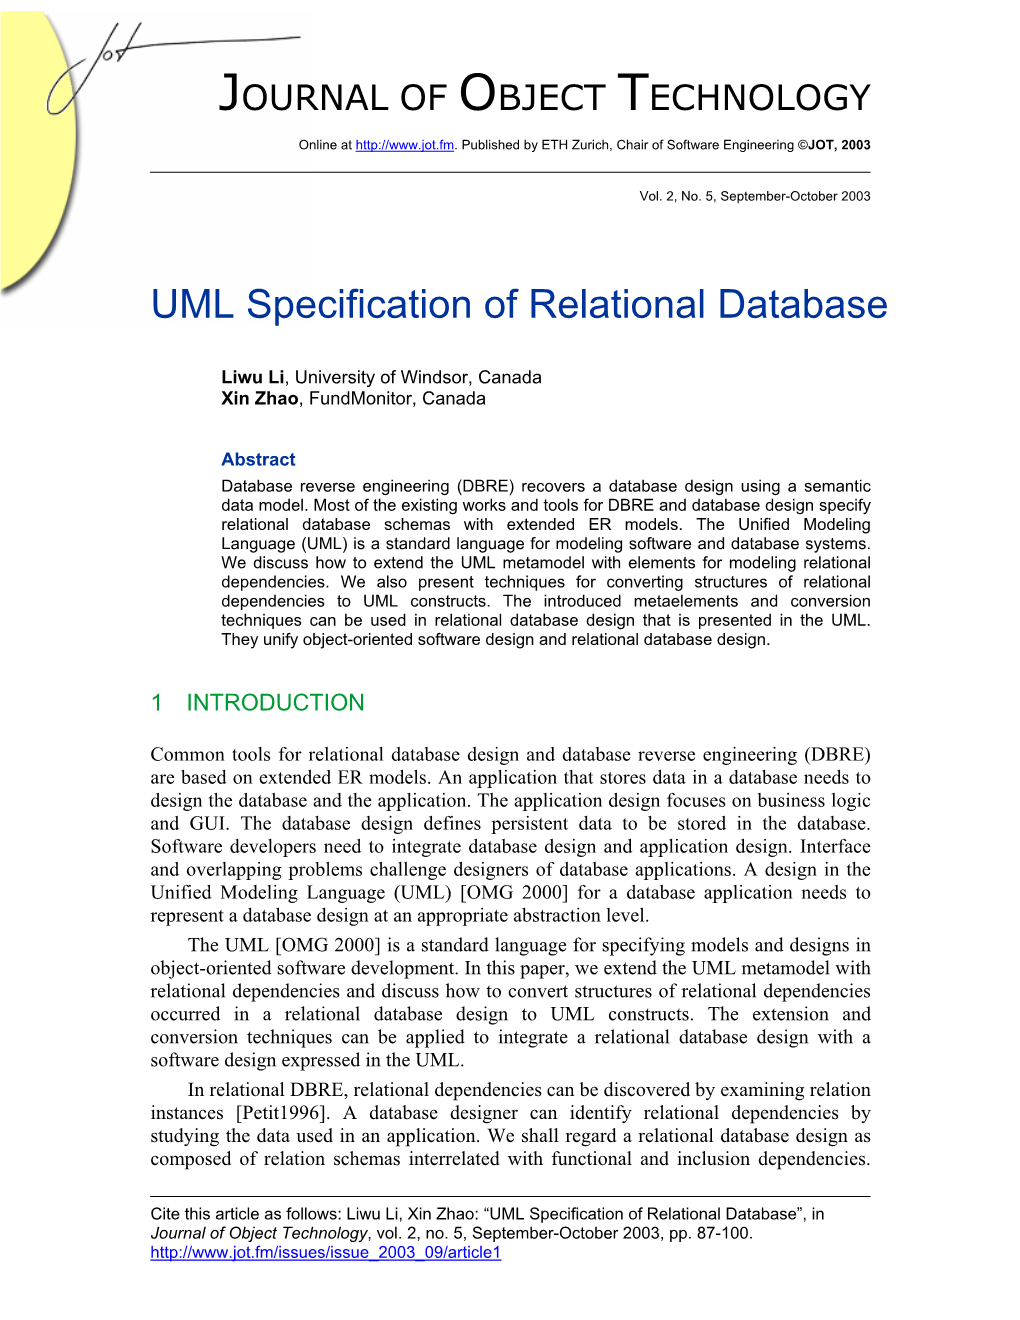 UML Specification of Relational Database